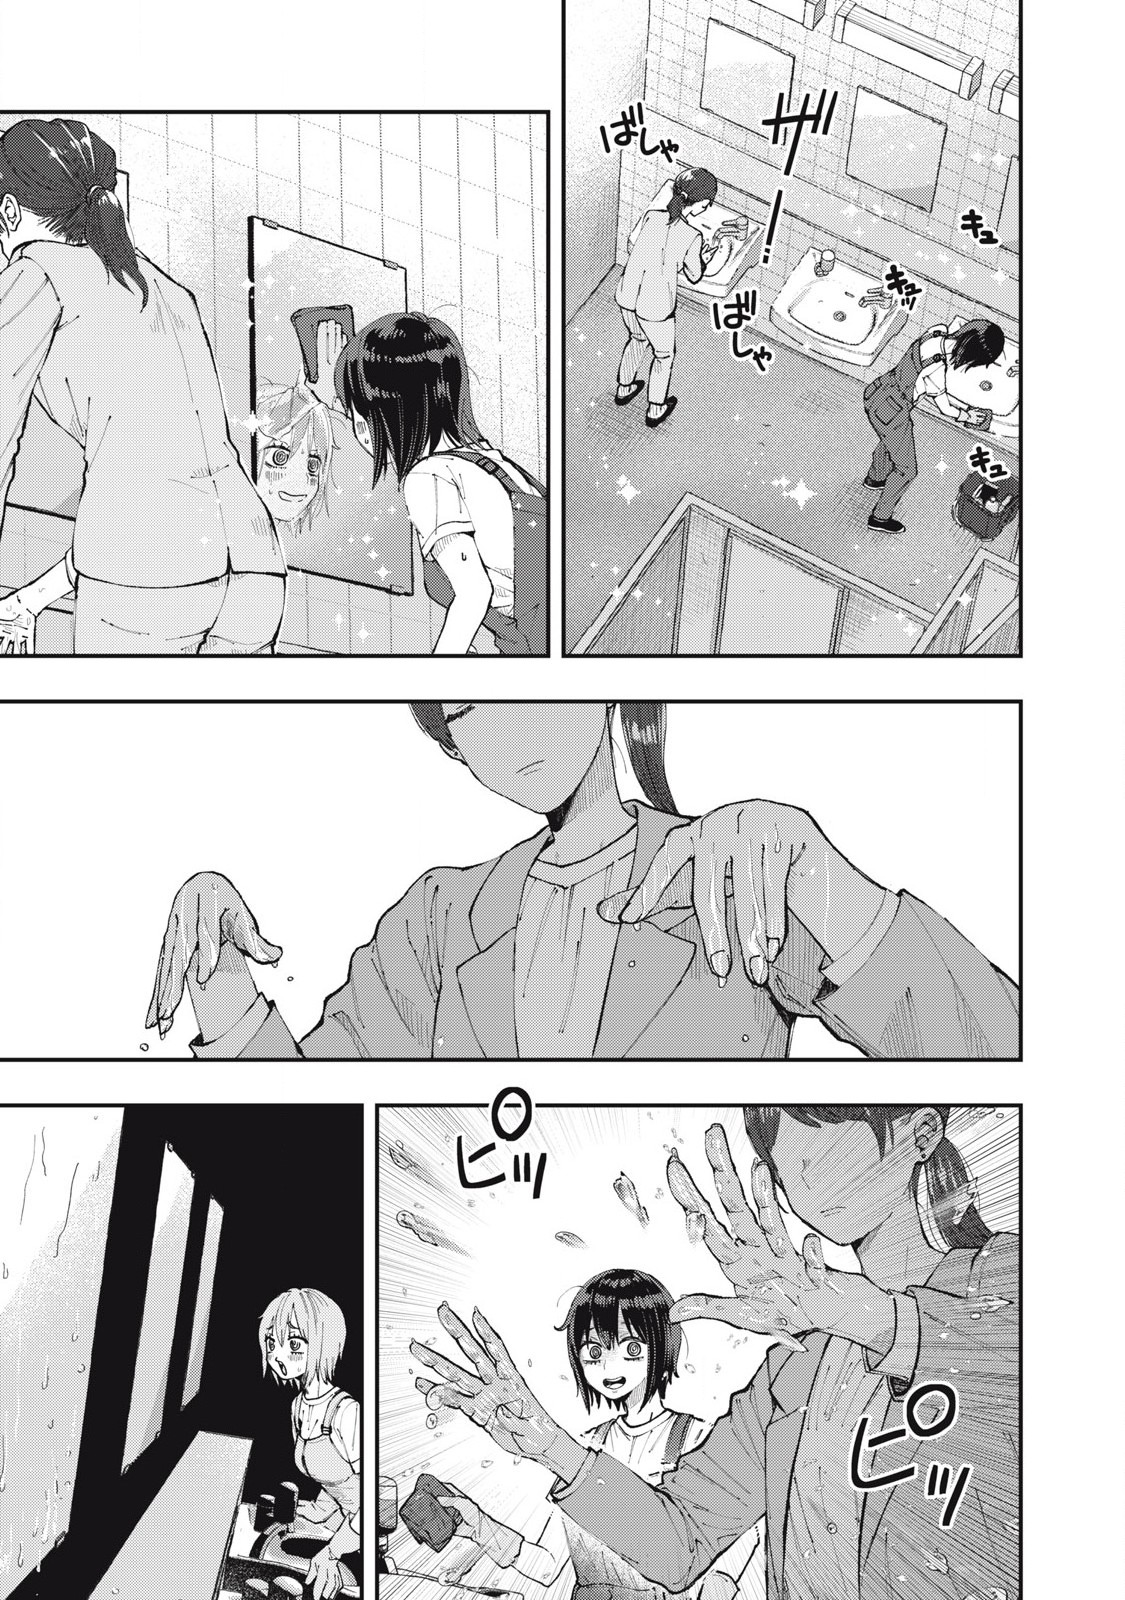 Seisouin Nono-chan Kyou no Tsubuyaki - Chapter 3 - Page 1